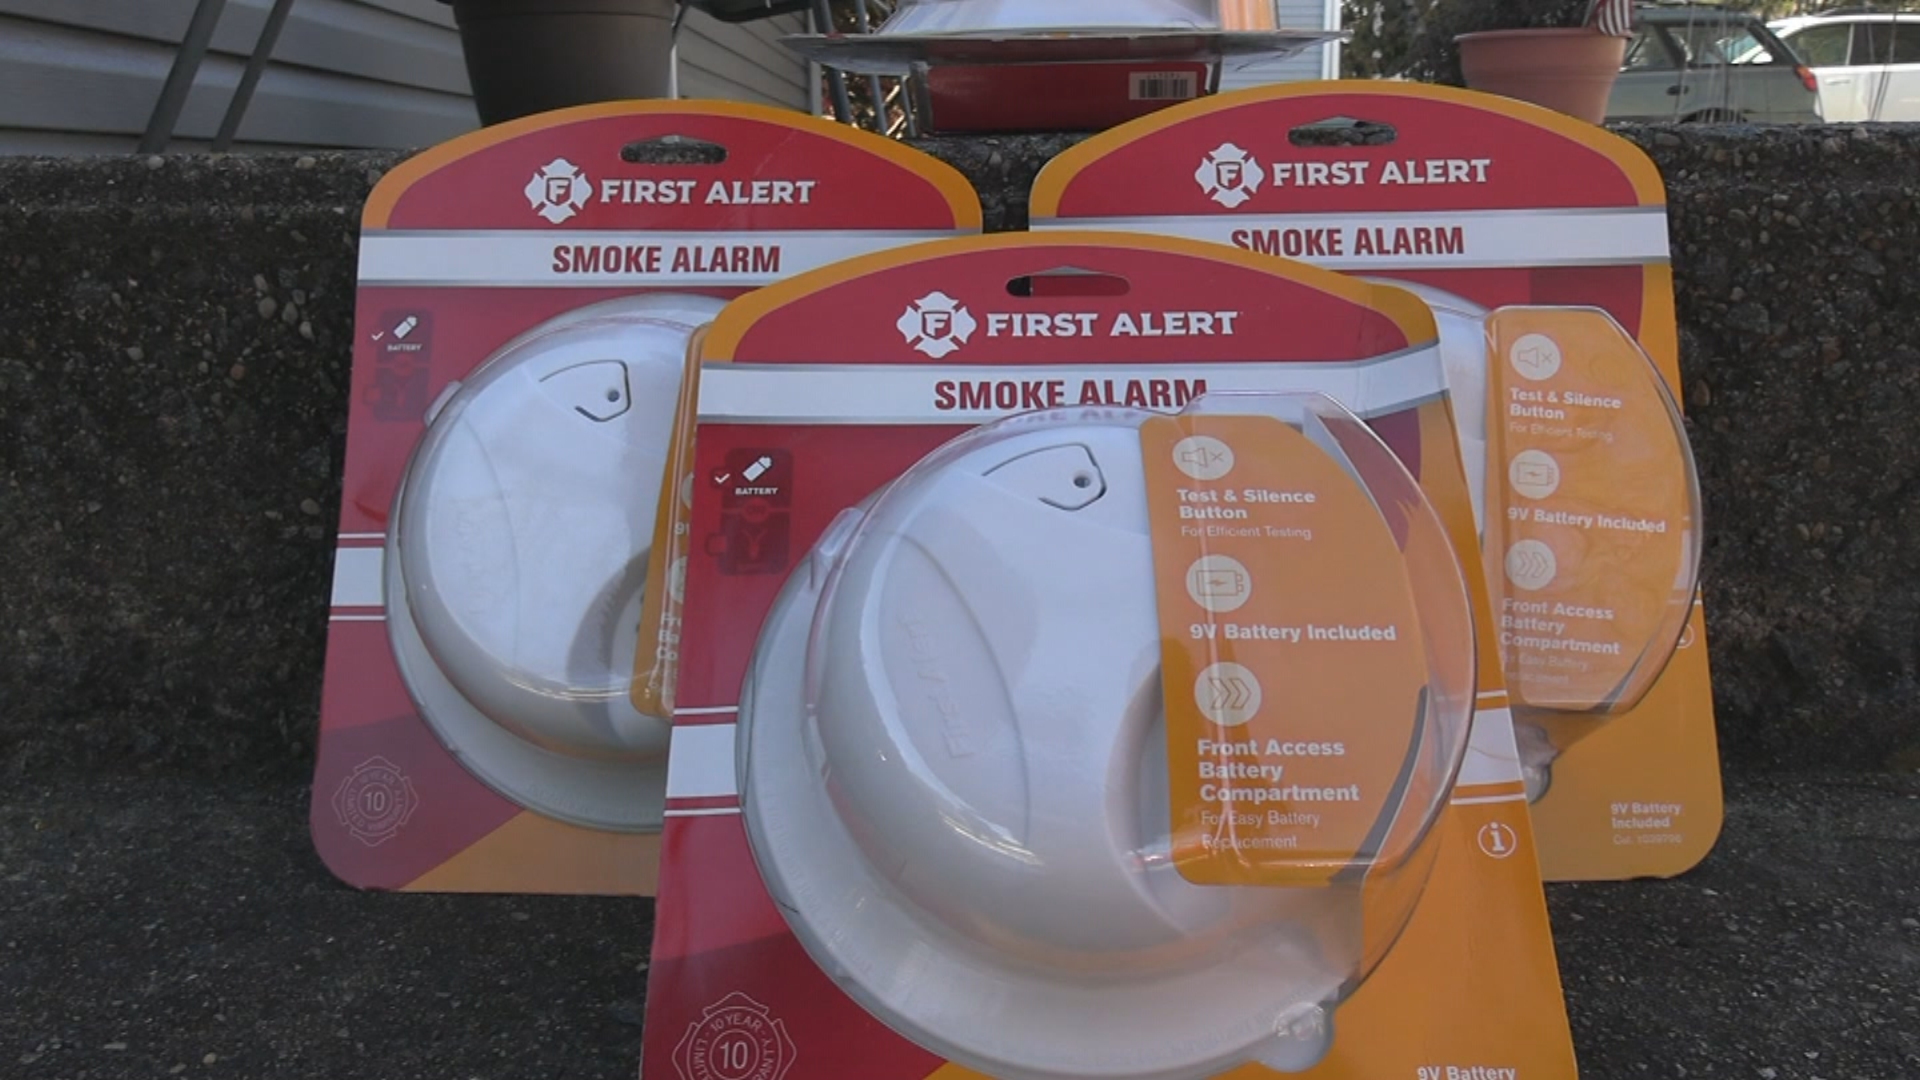 Bucks County DJ Service Raises Money To Buy Smoke Detectors For Local Families